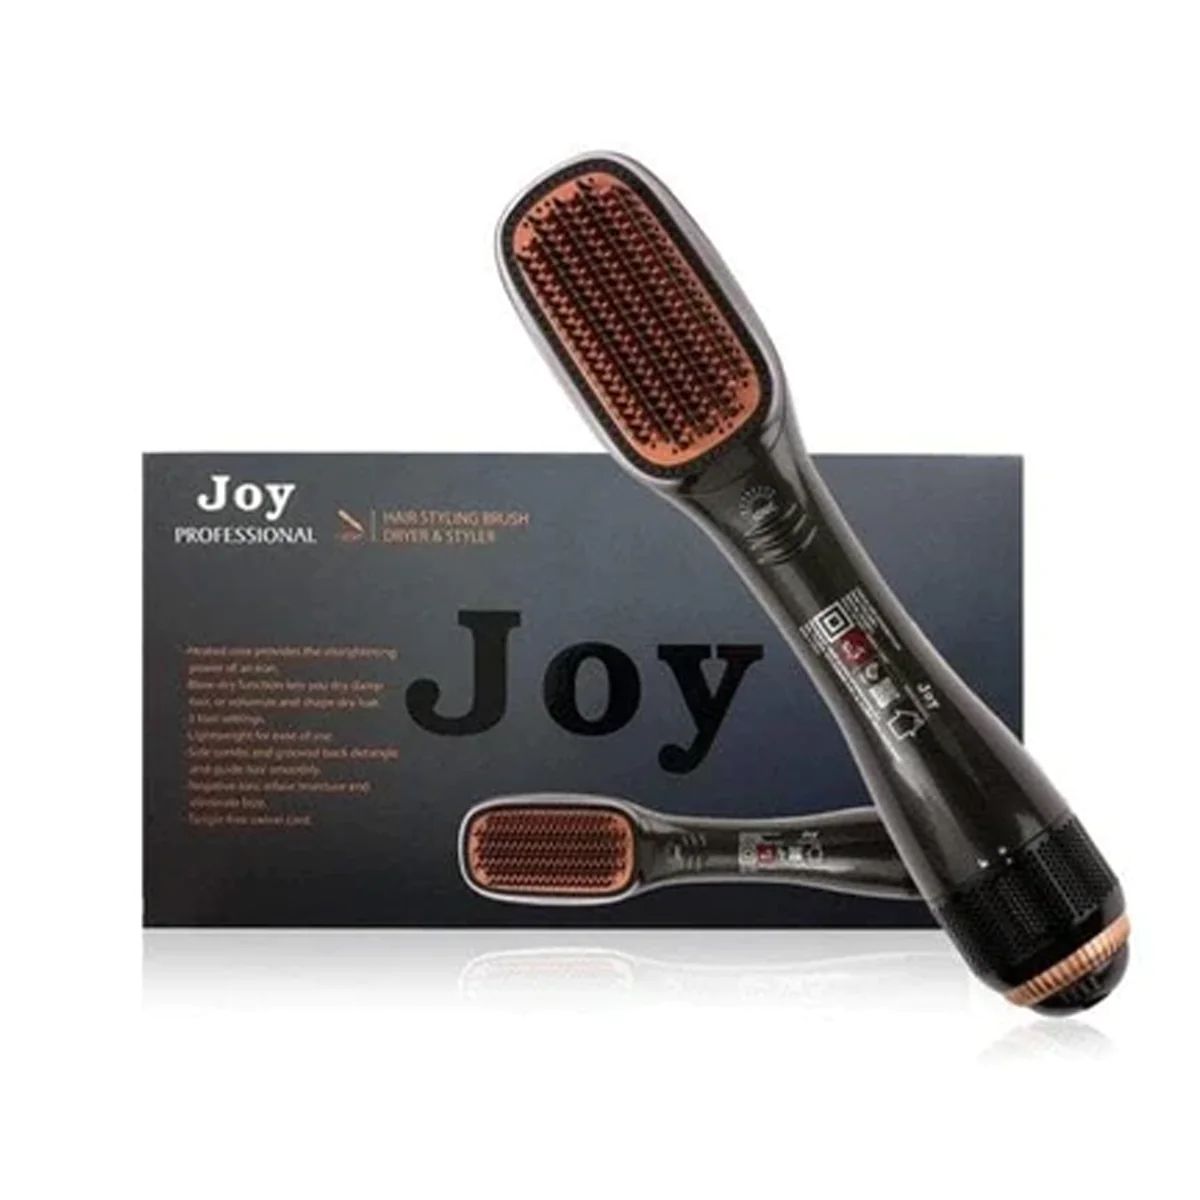 Joy Professional Styling Brush 2 In 1